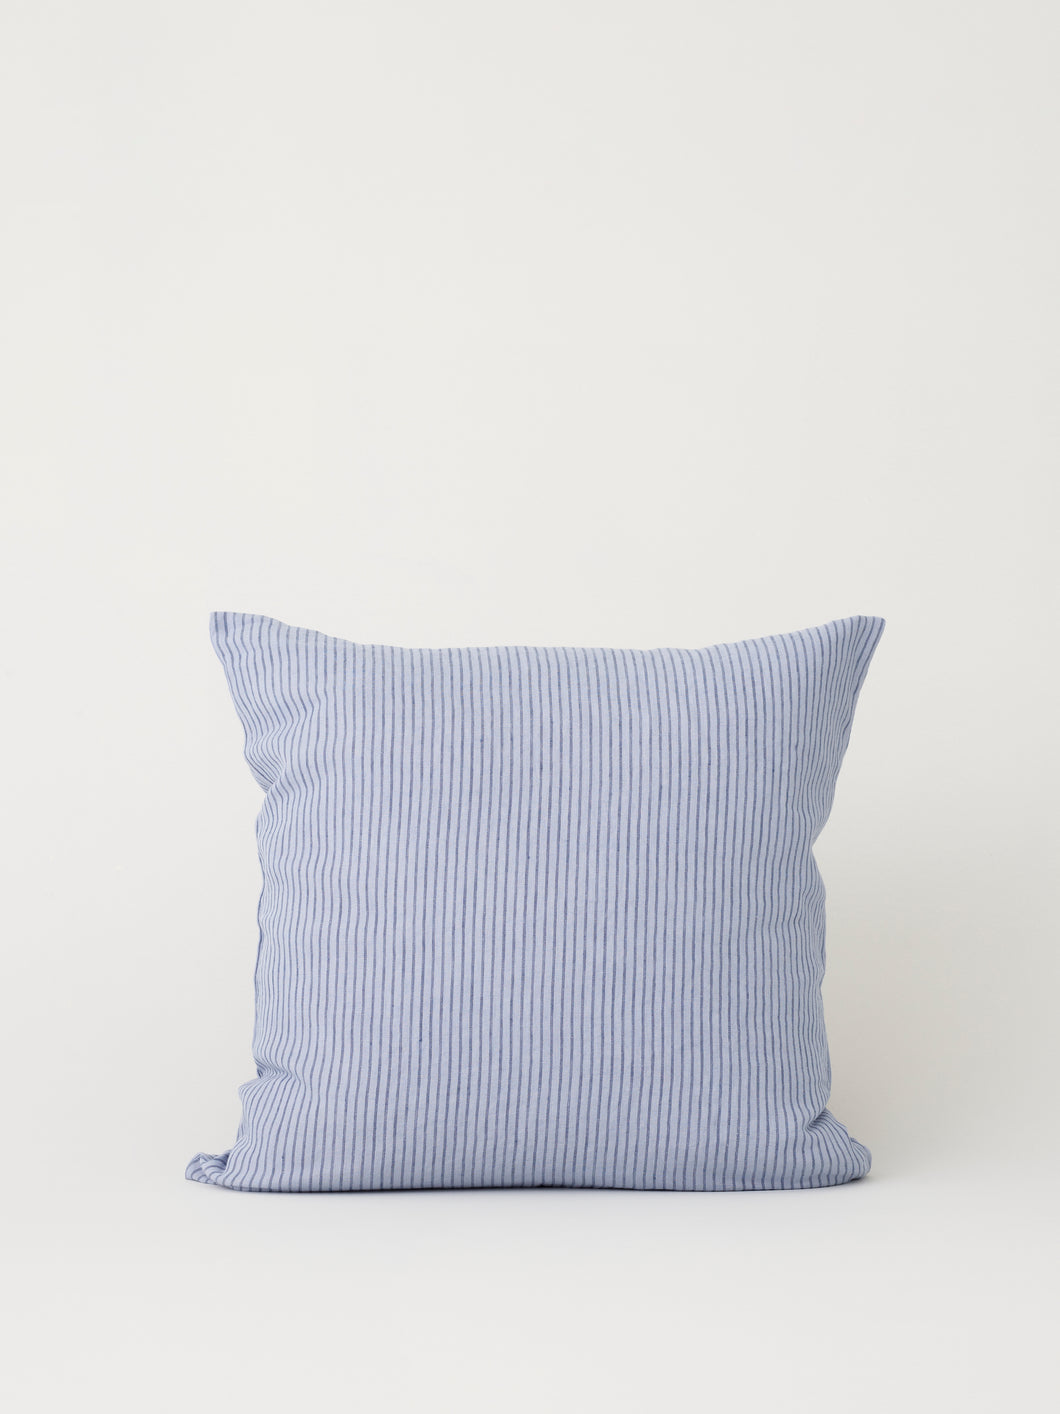 Stilleben cushion cover celestial blue/navy